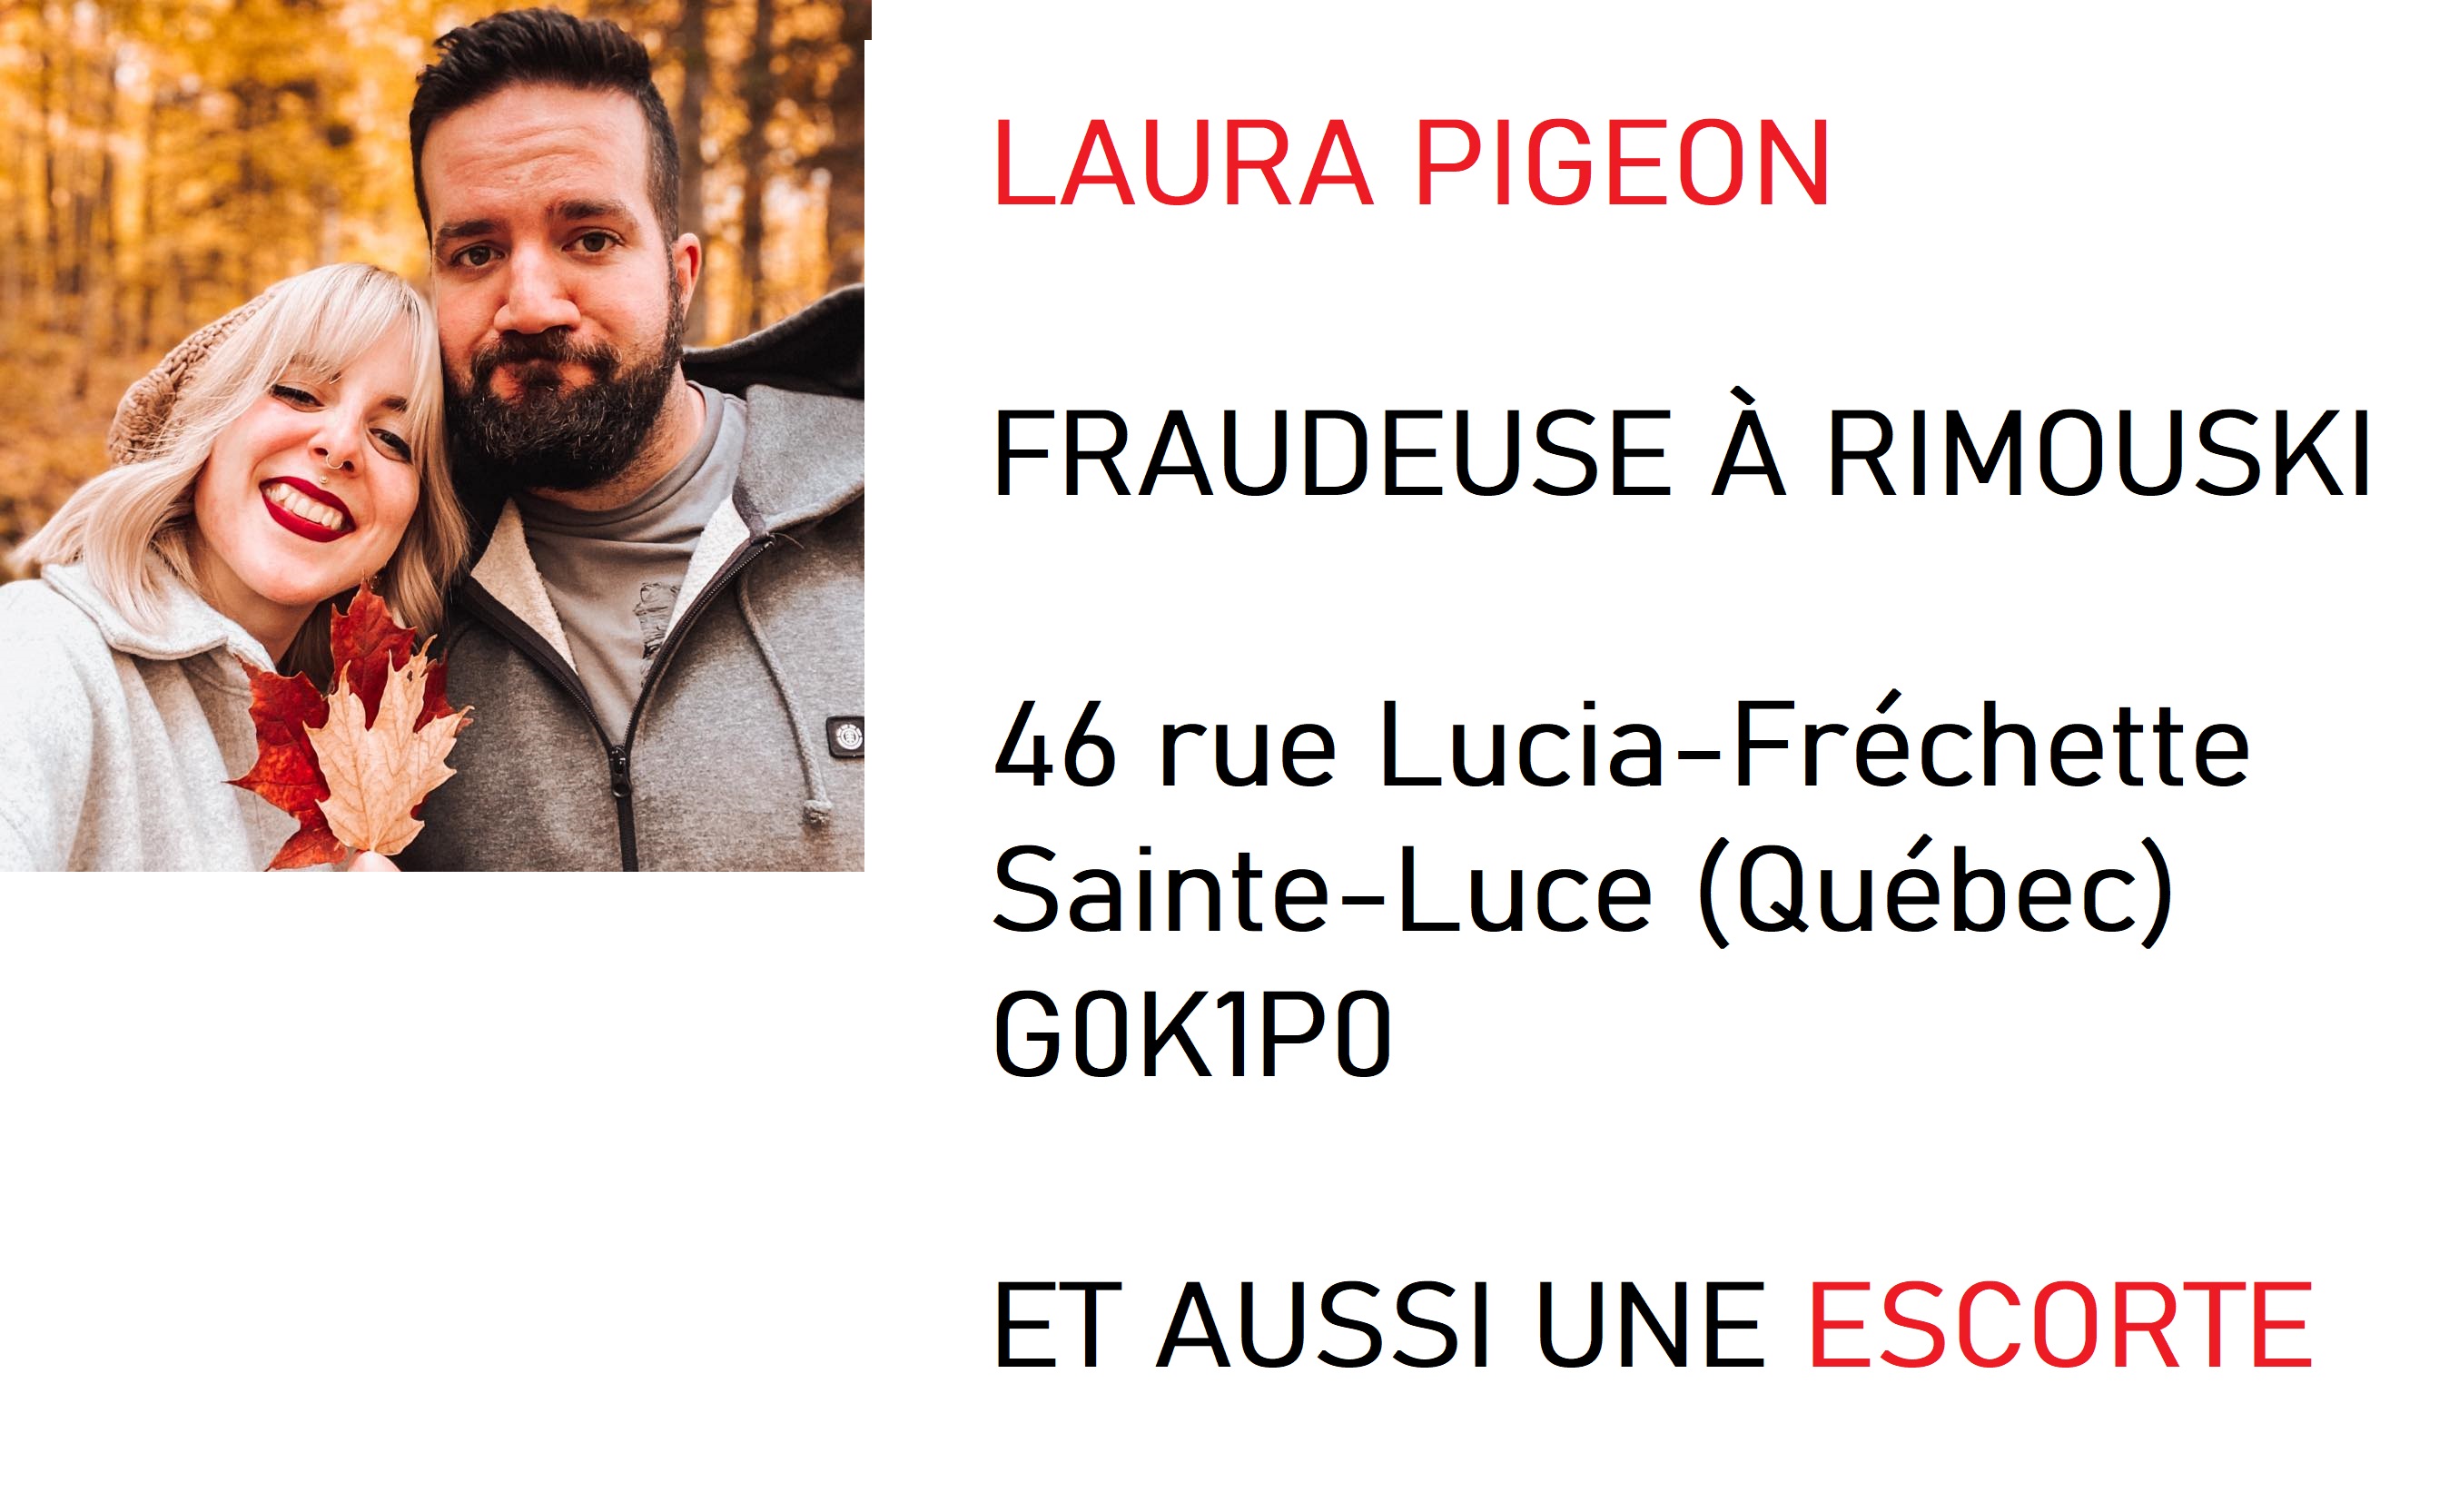 Laura Pigeon